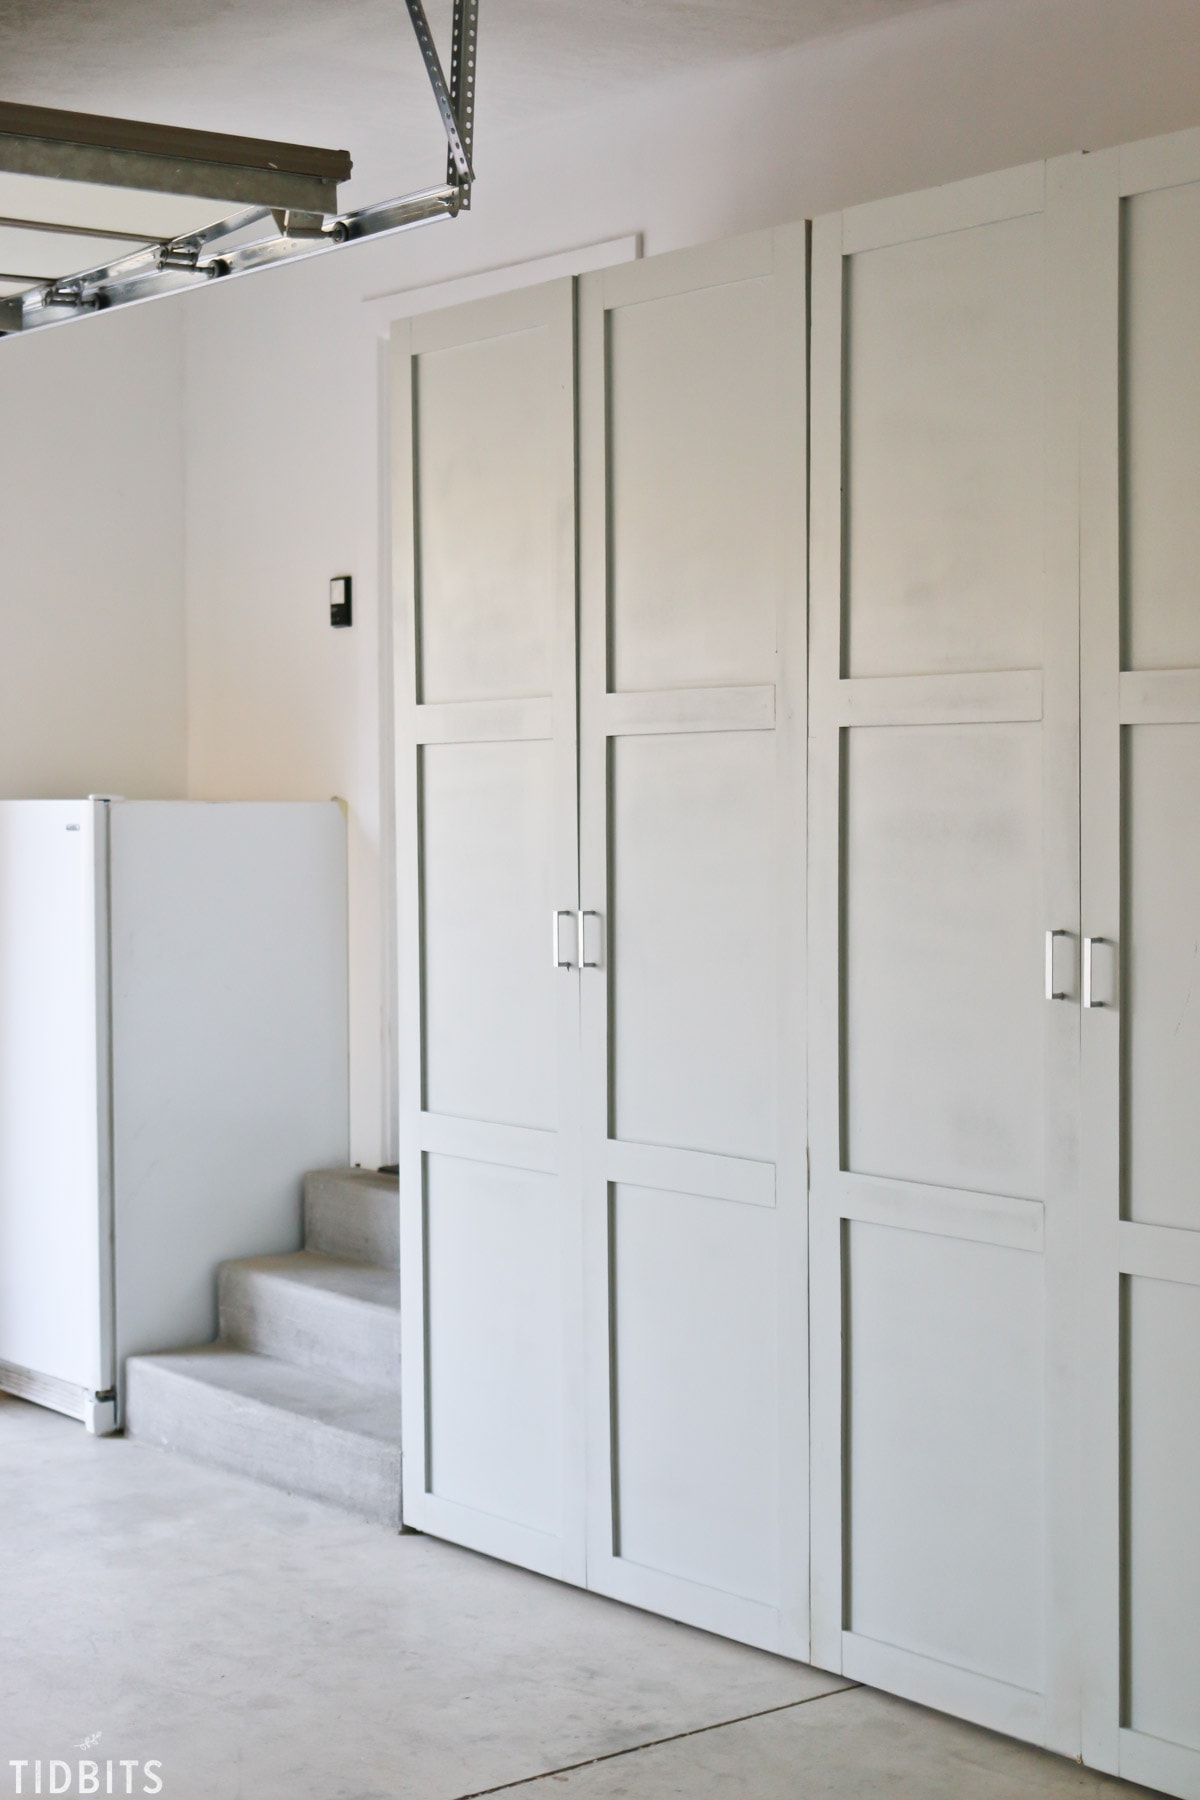 Garage Storage Cabinets Free Building, Built In Storage Cabinets For Garage Door